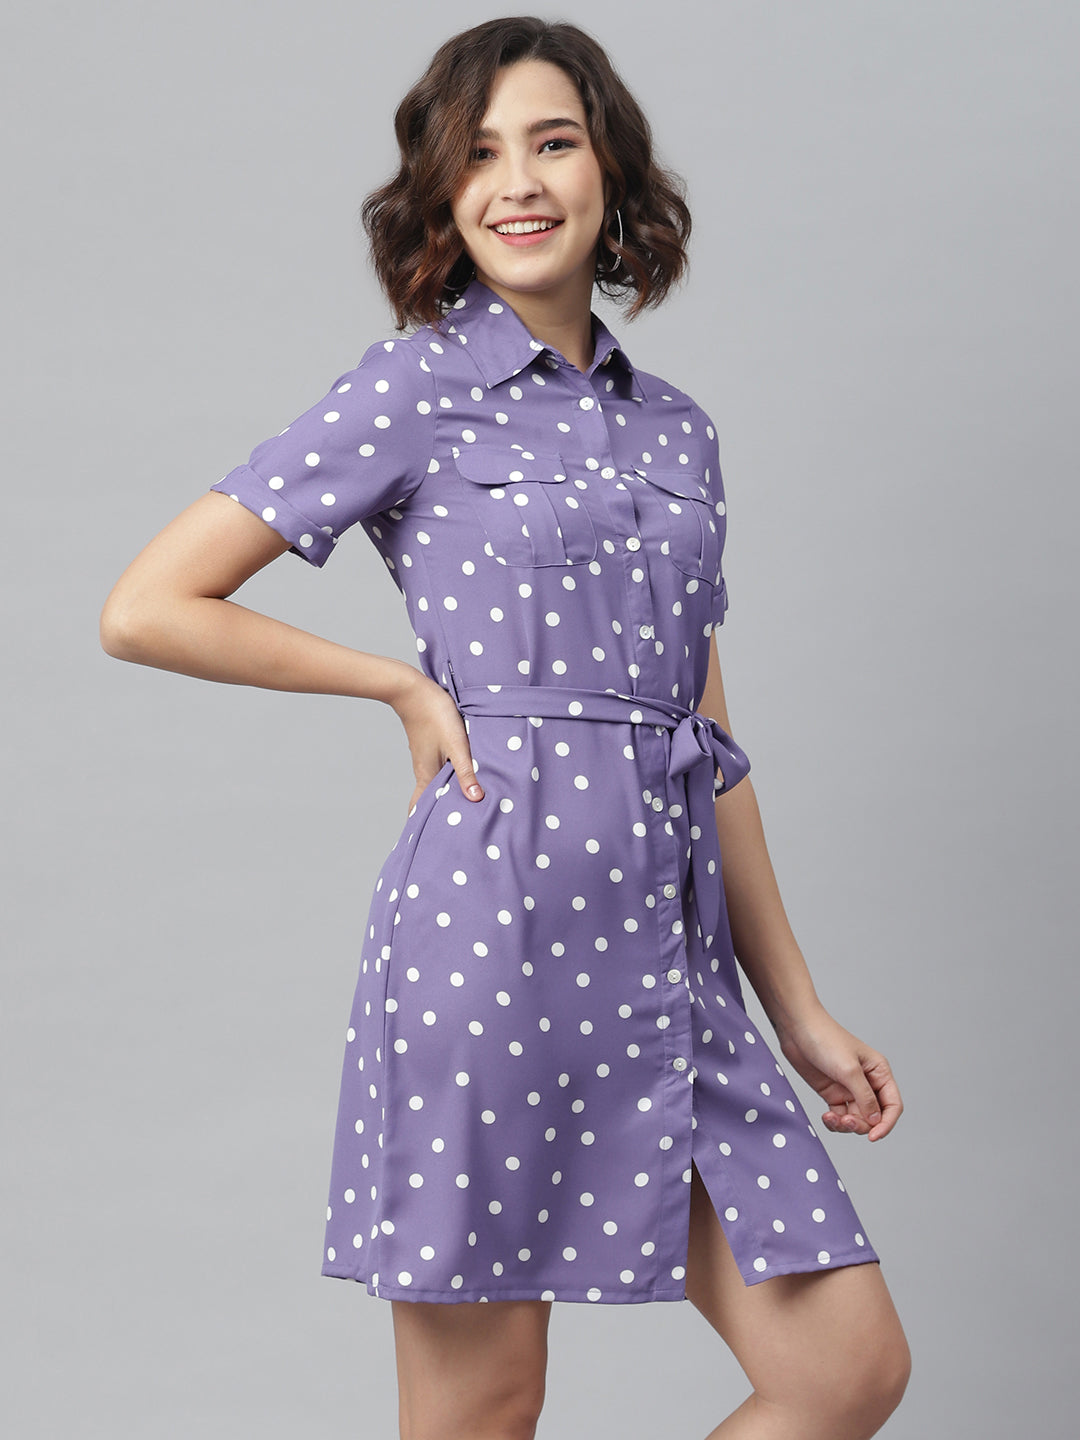 Women's Lavender Polka Shirt Dress with belt